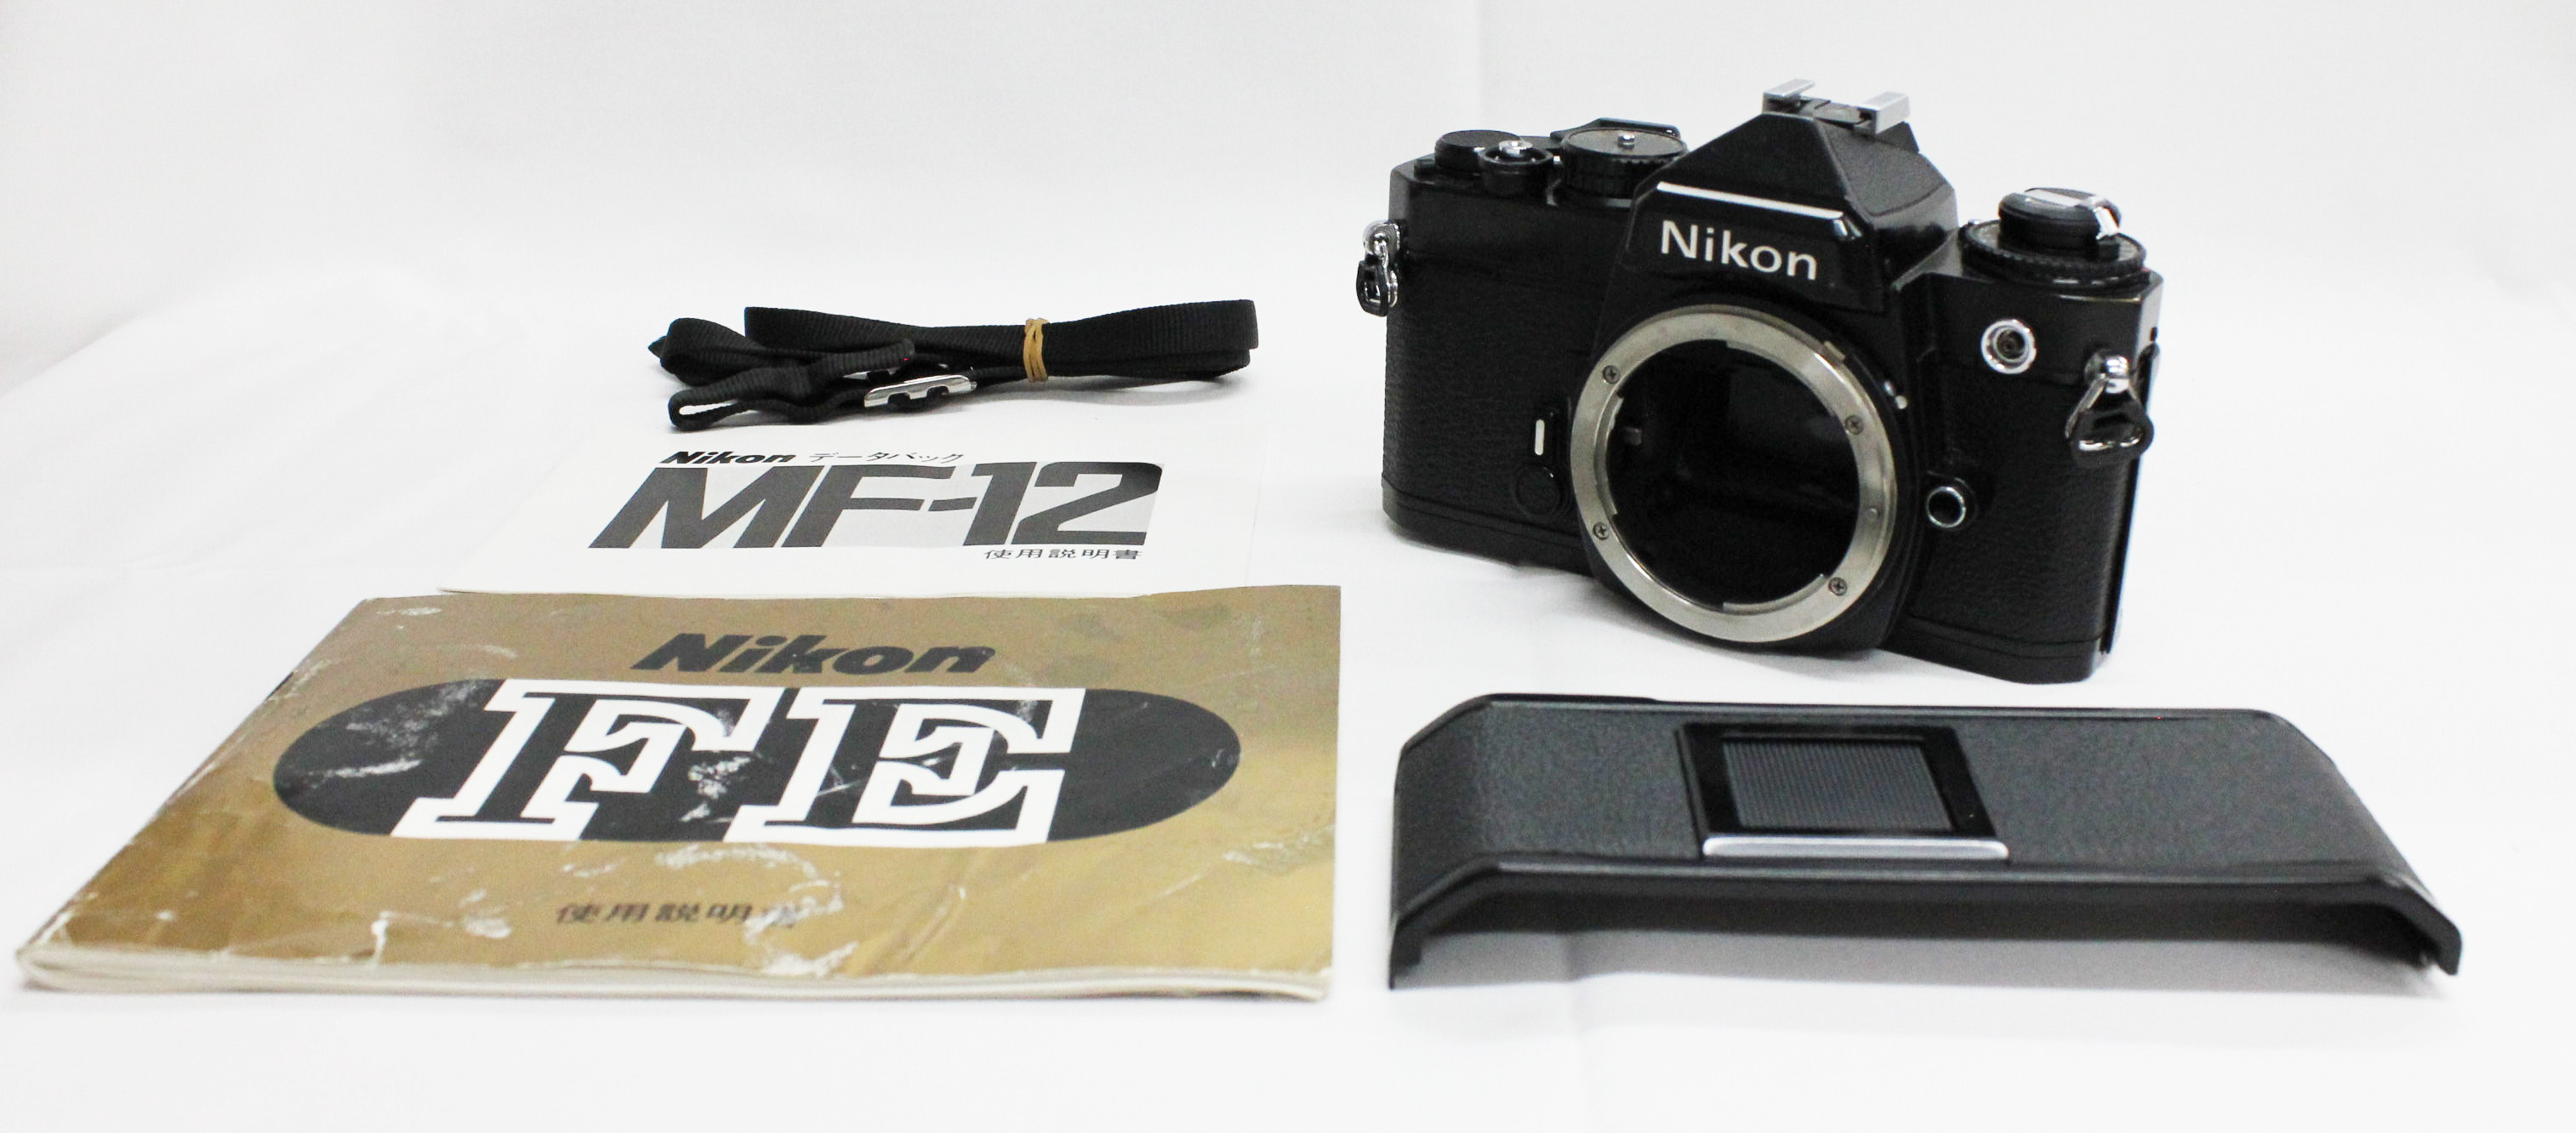 Japan Used Camera Shop | [Excellent+++++] Nikon FE Black 35mm SLR Film Camera Body w/ Data Back MF-12 from Japan